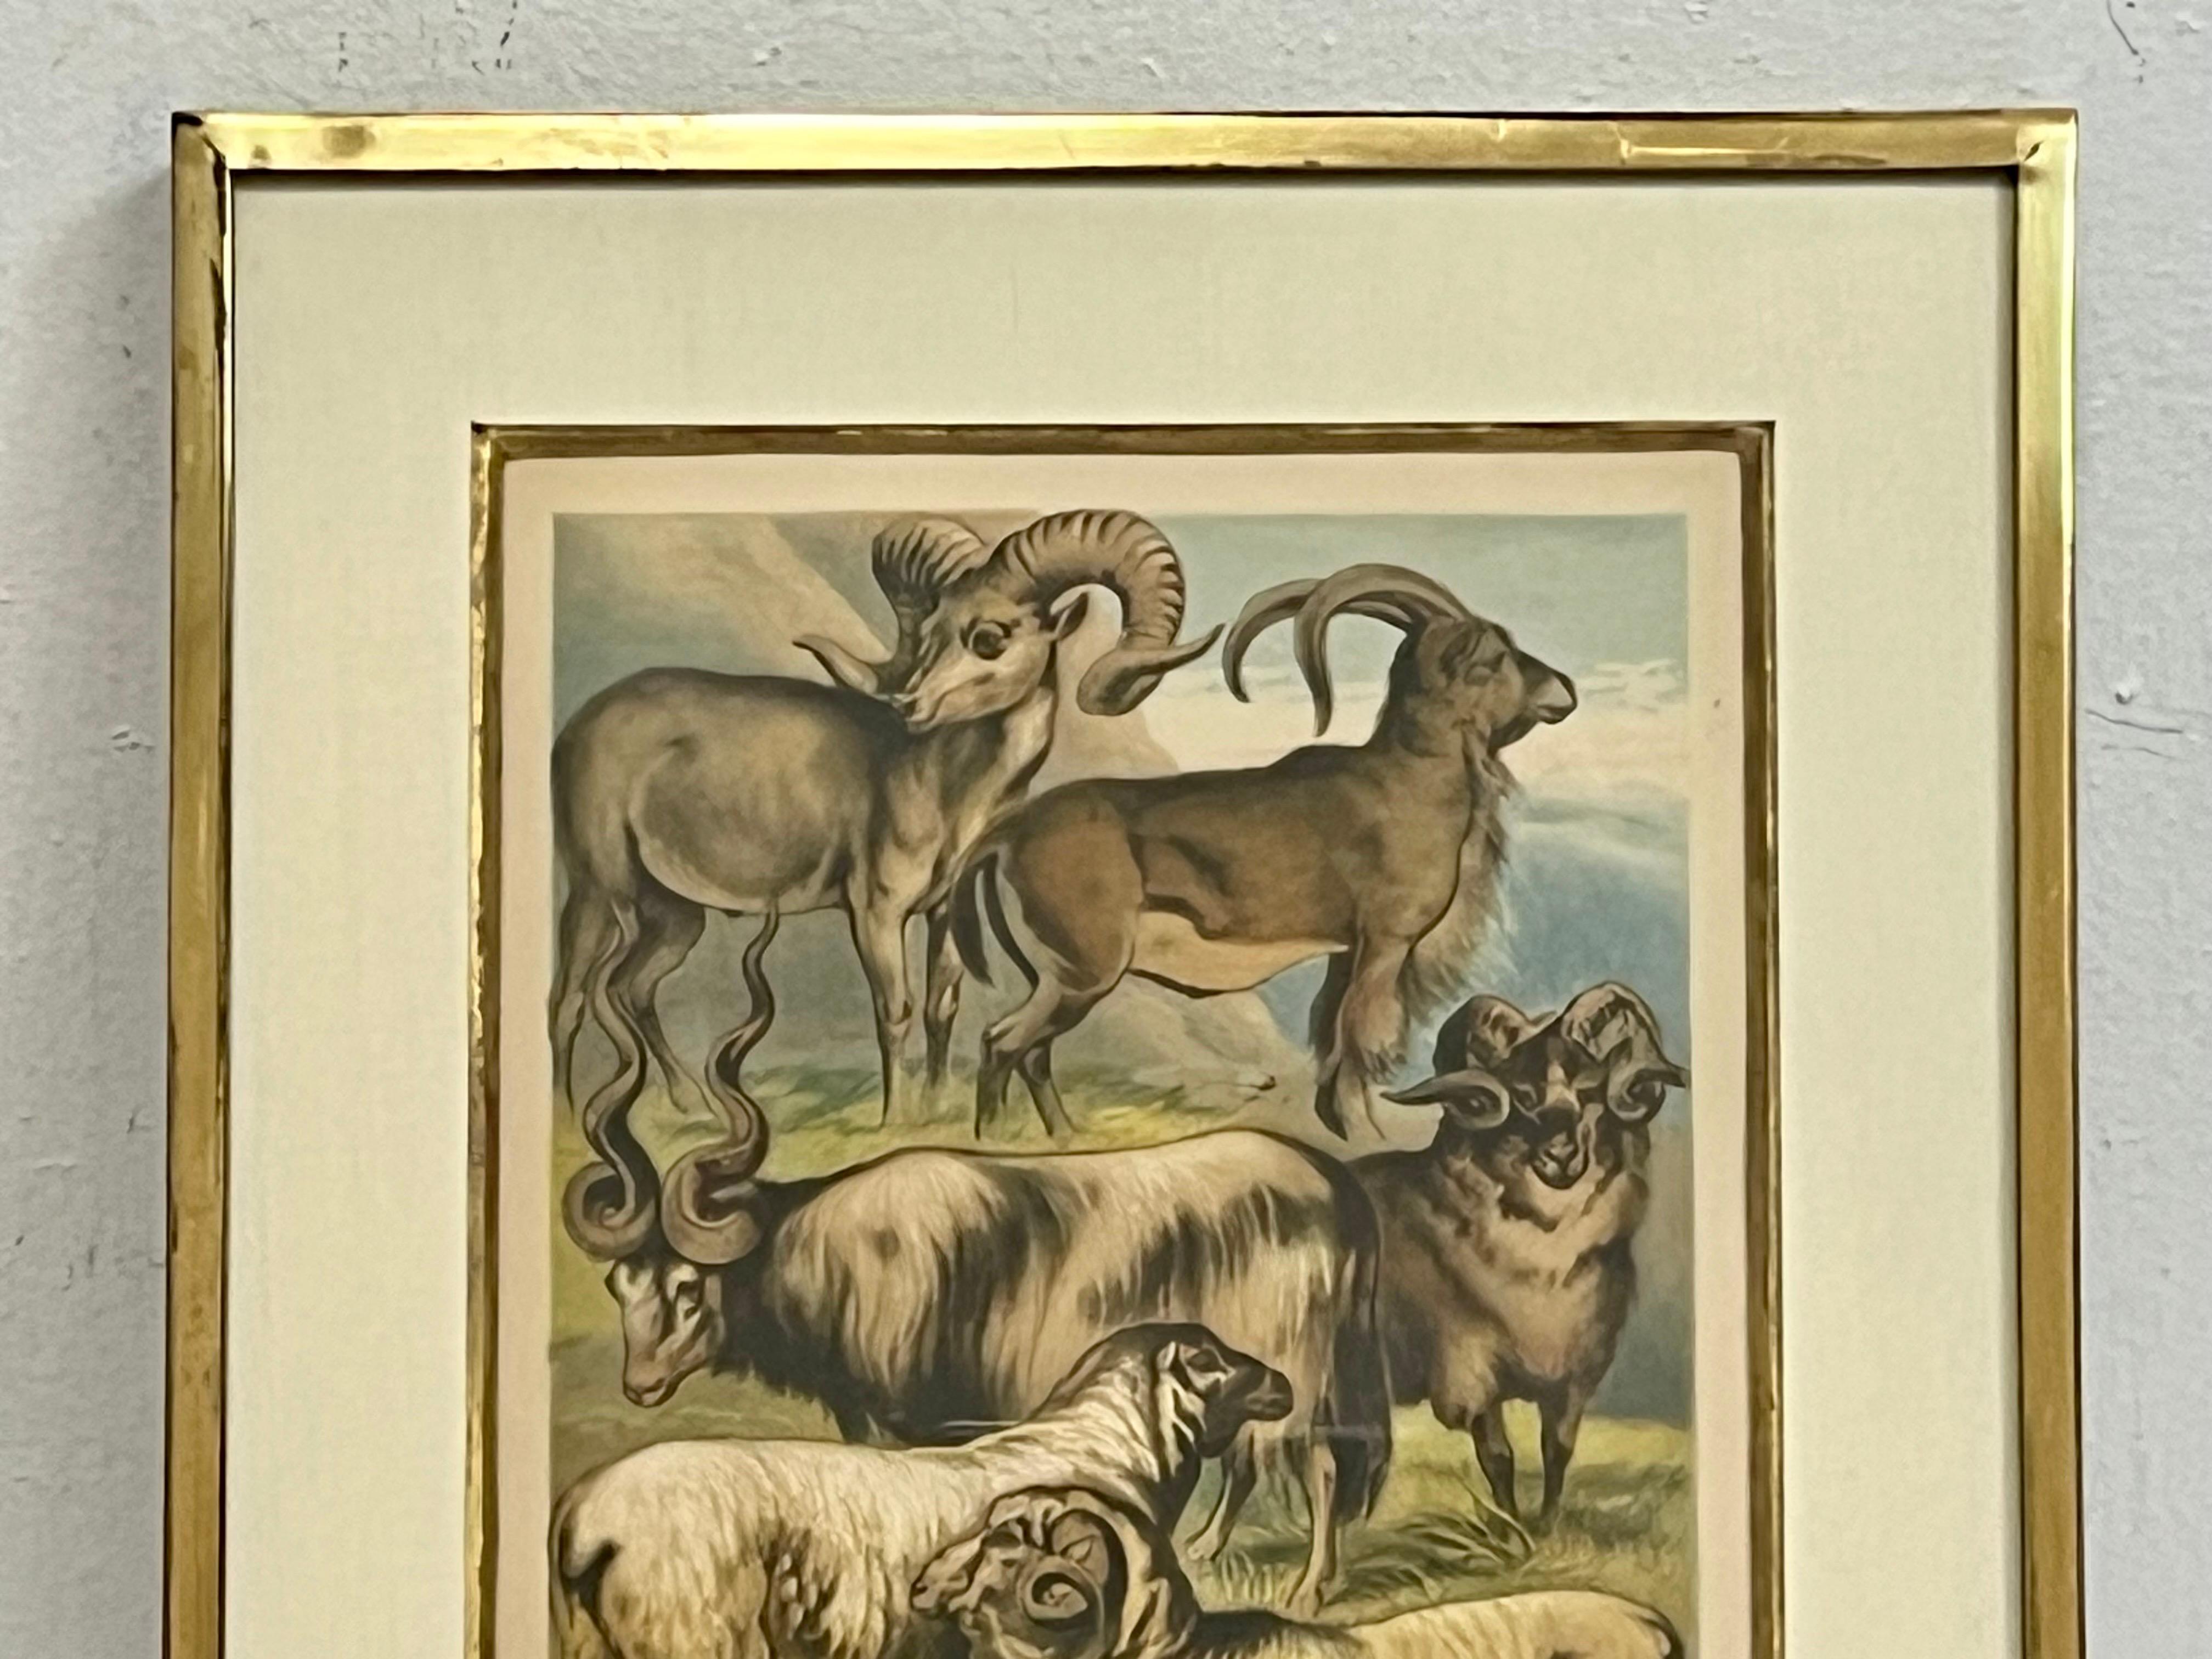 Metal 19th Century English Print by H. Johnson Plate L Ungulata Sheep in Kulicke Frame